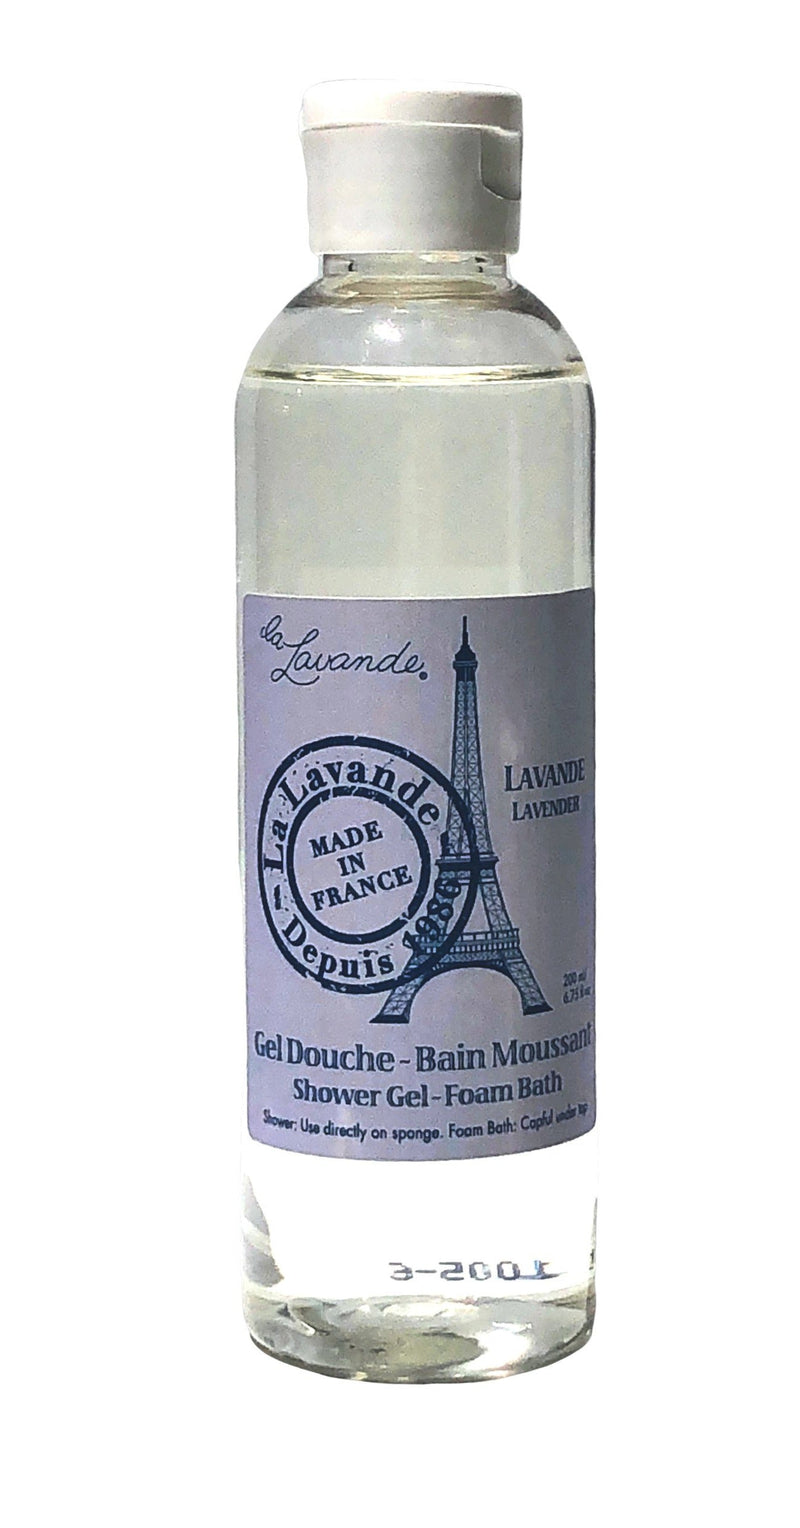 Transparent plastic bottle with La Lavande Lavender Shower Gel & Foam Bath. The label has an Eiffel Tower image and text stating "La Lavande made in France depuis".